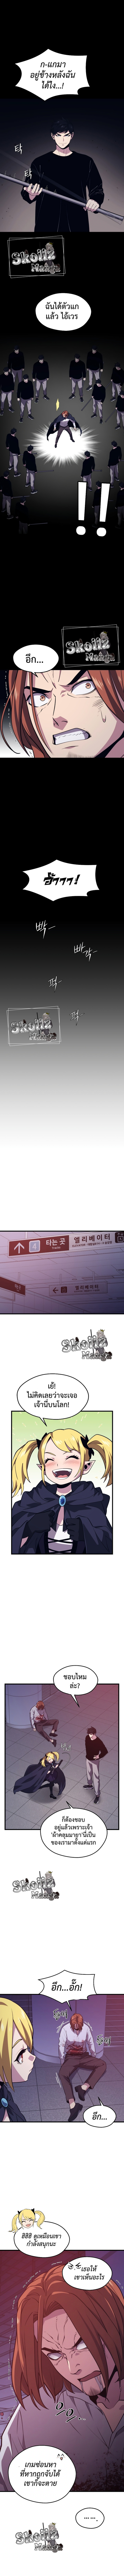 Seoul Station’s Necromancer 66 (3)